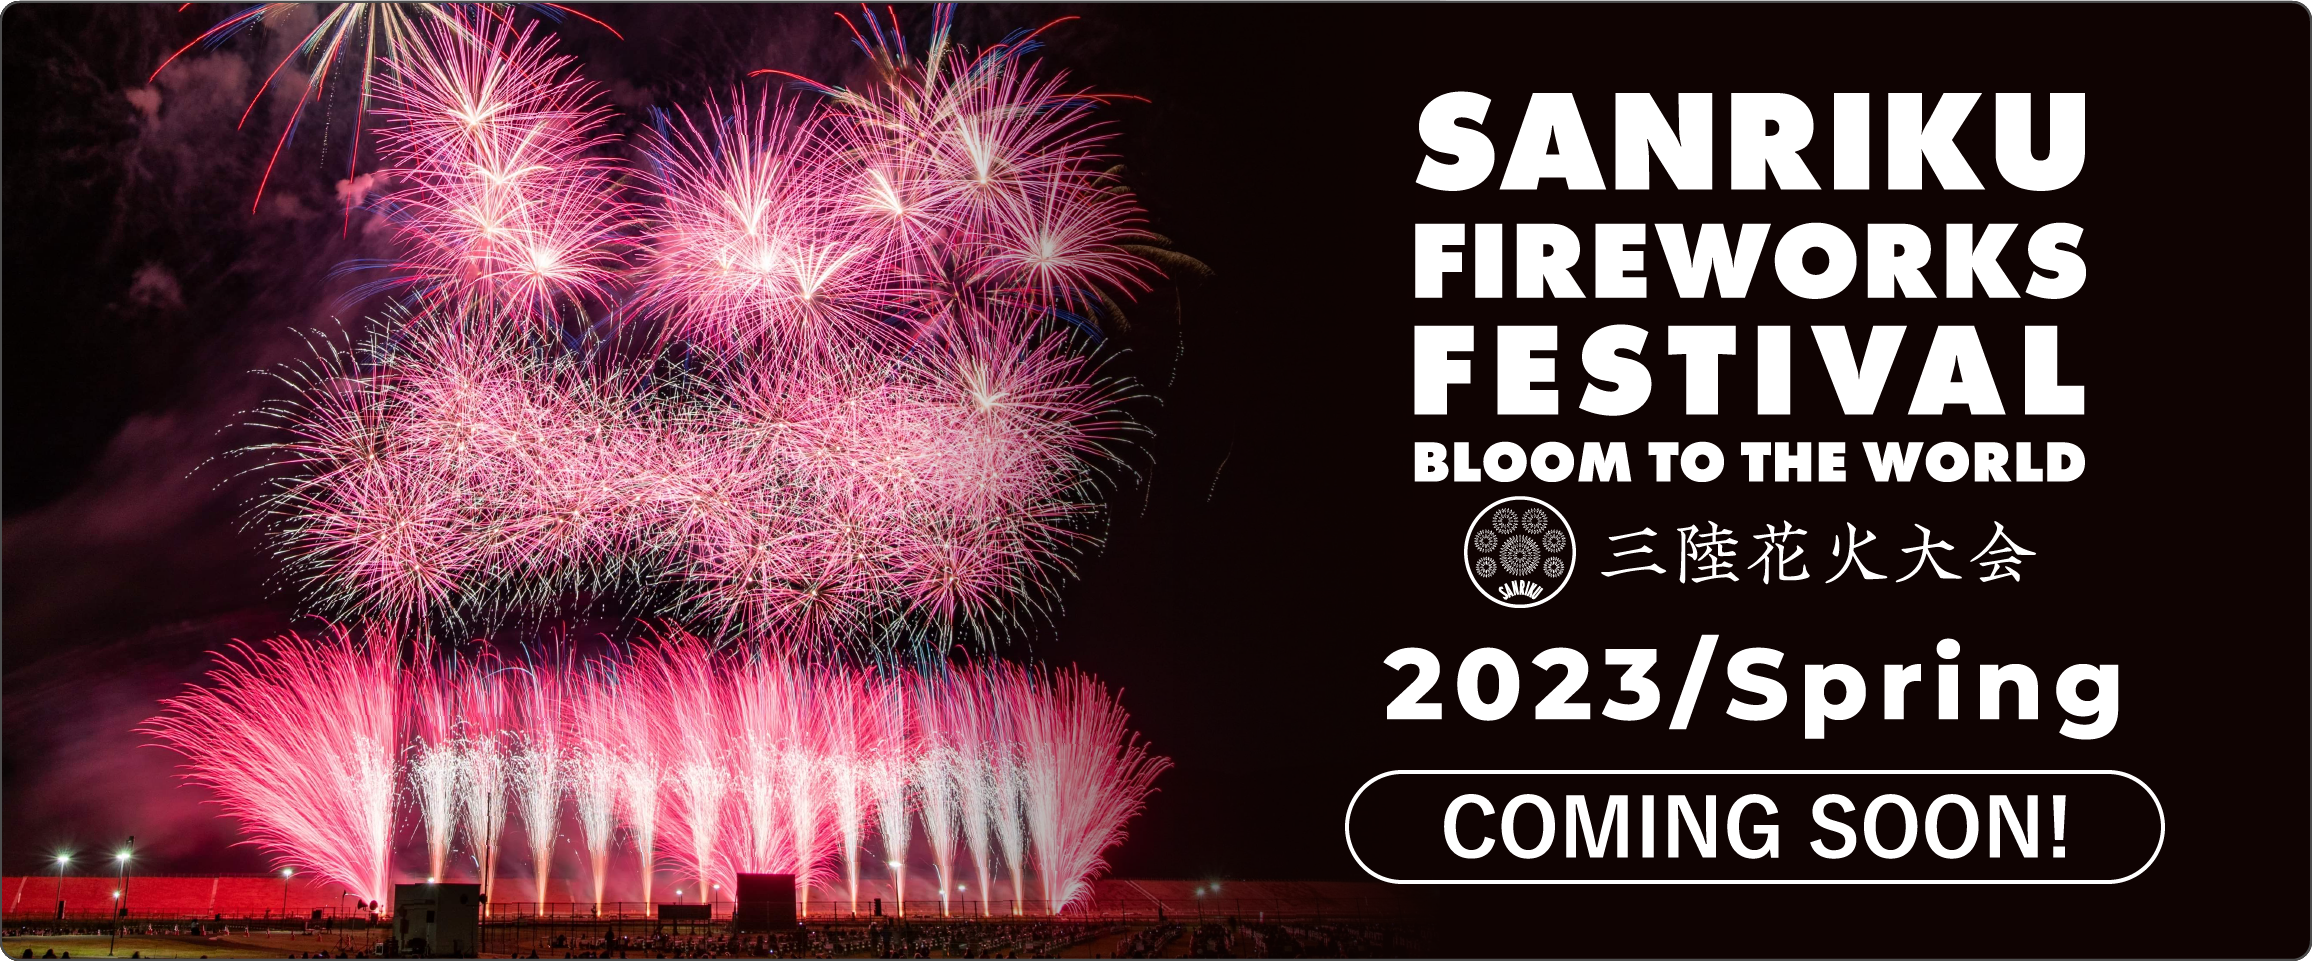 The Sanriku Fireworks Festival